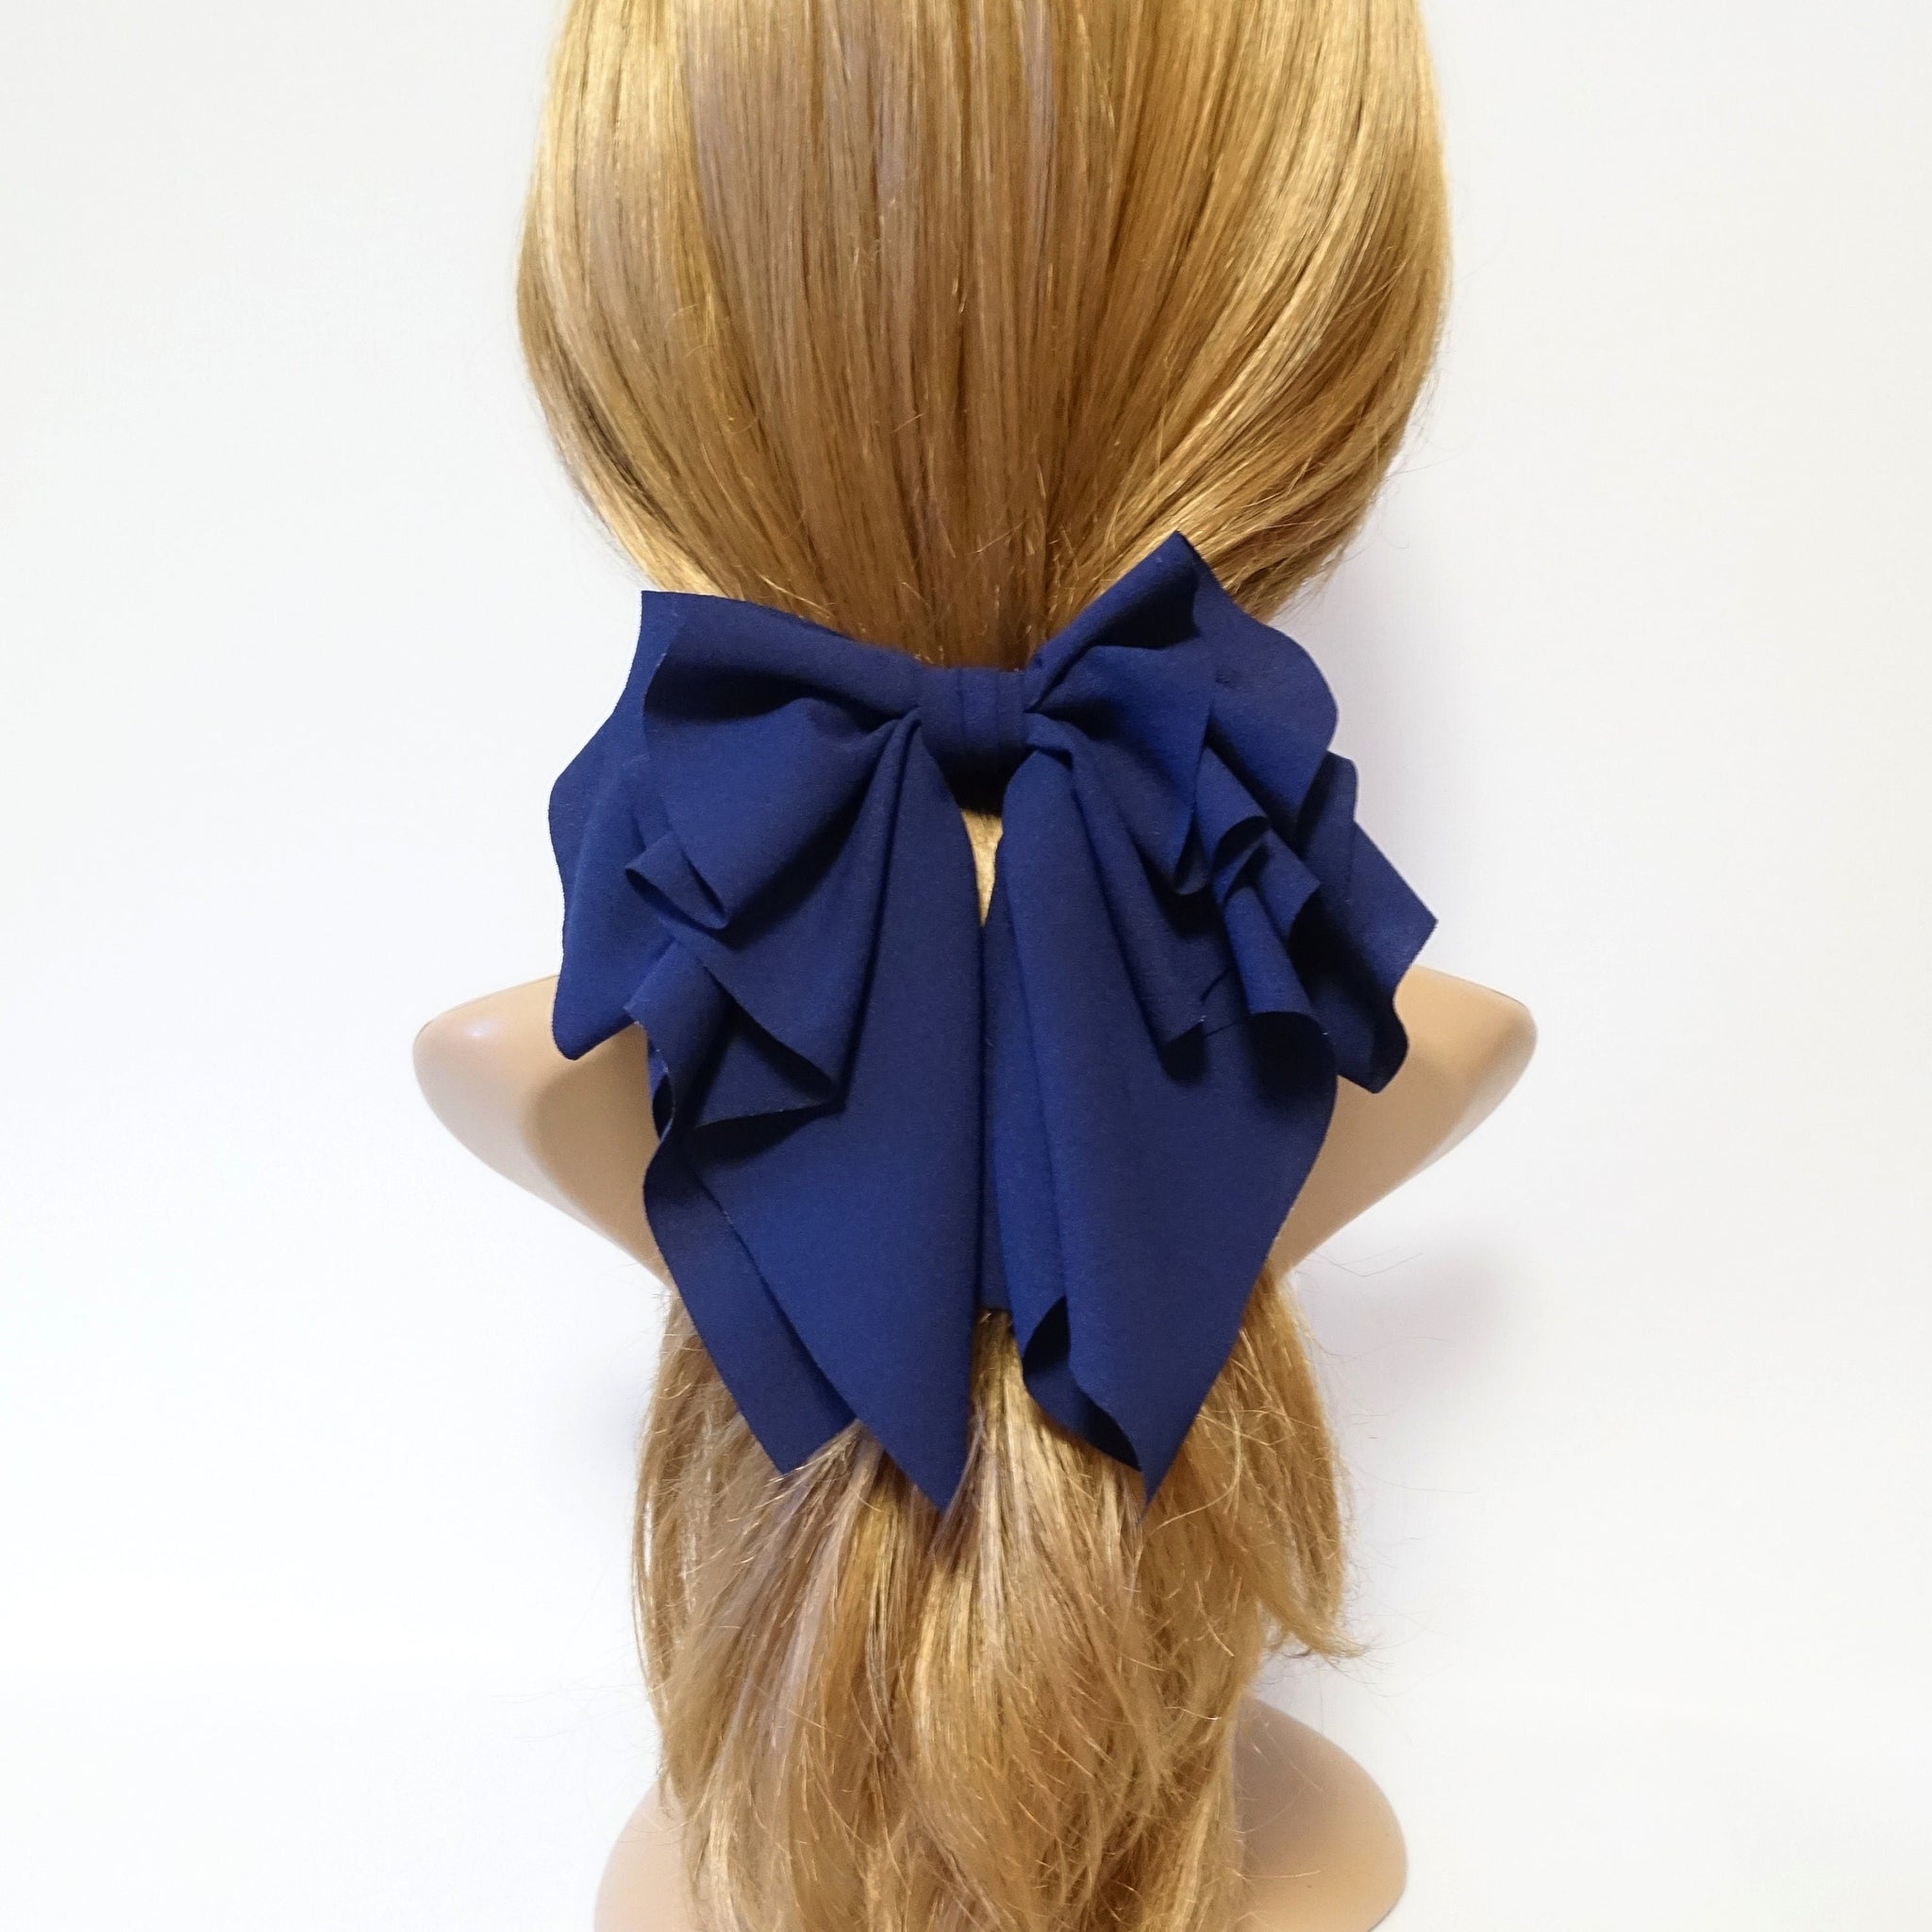 veryshine.com Barrette (Bow) Navy romance chiffon hair bow french barrette drape falling ruffle wave feminine style women hair clip